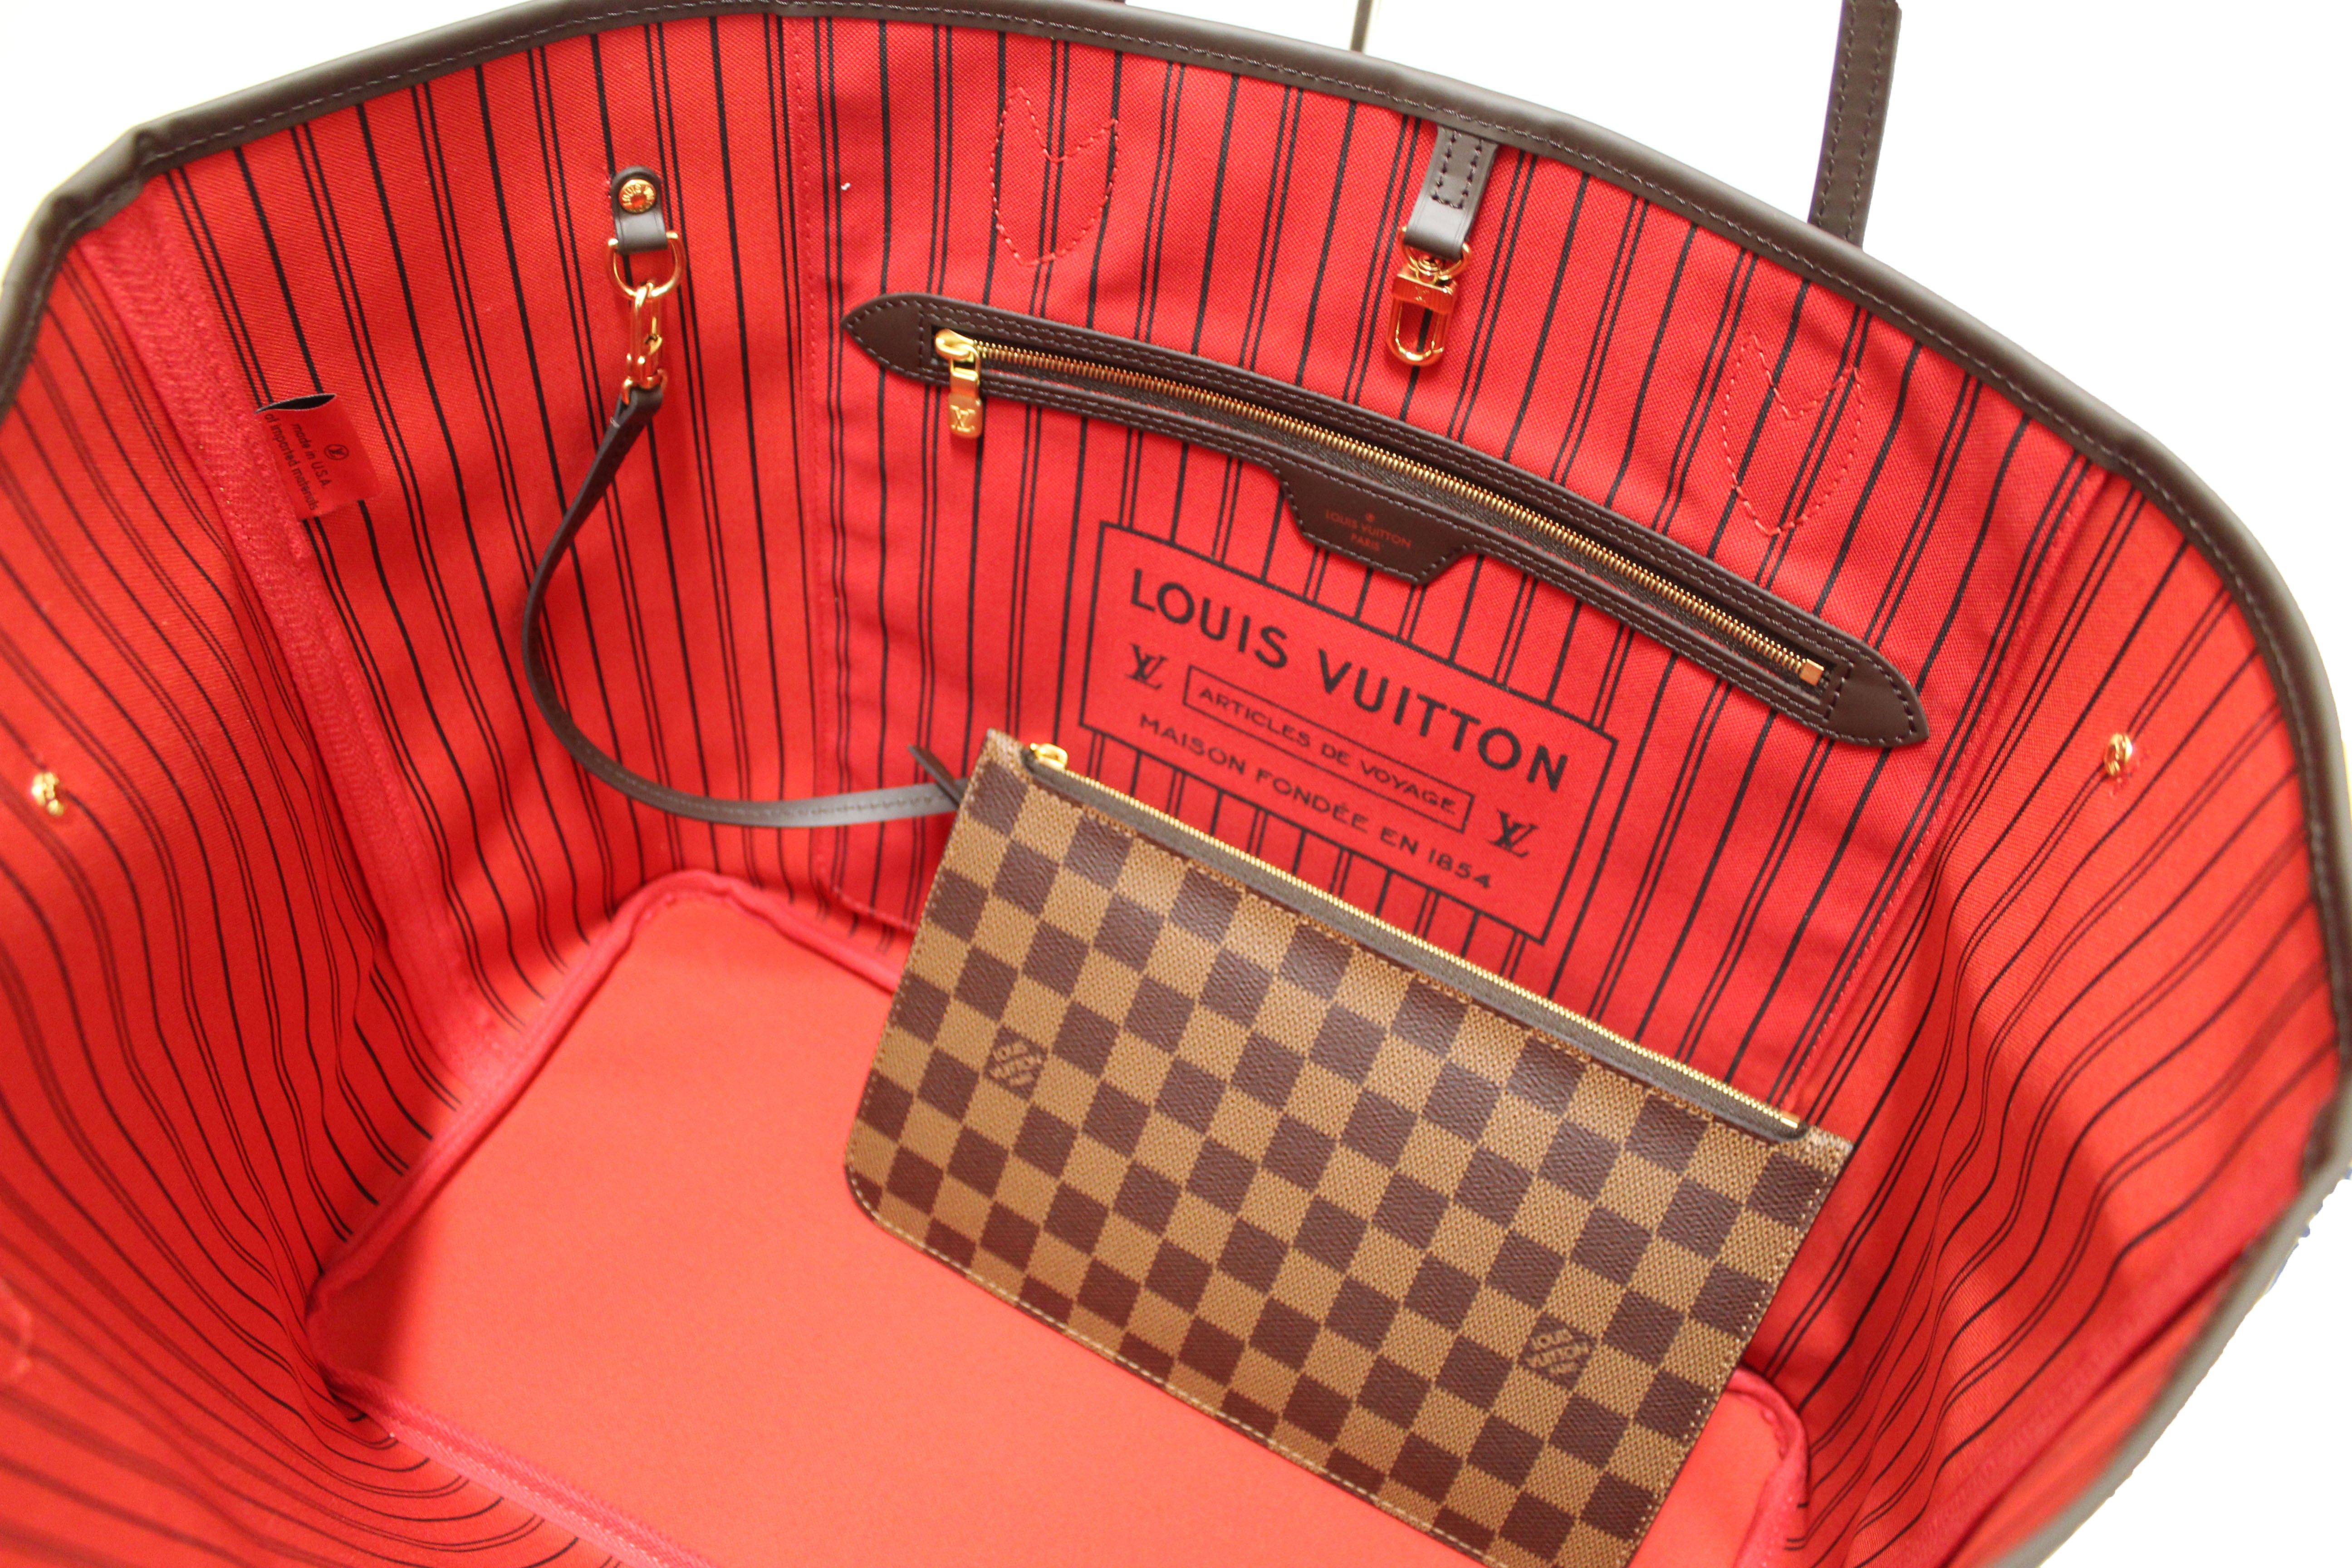 Authentic Louis Vuitton Damier Ebene Neverfull GM Tote Shoulder Bag